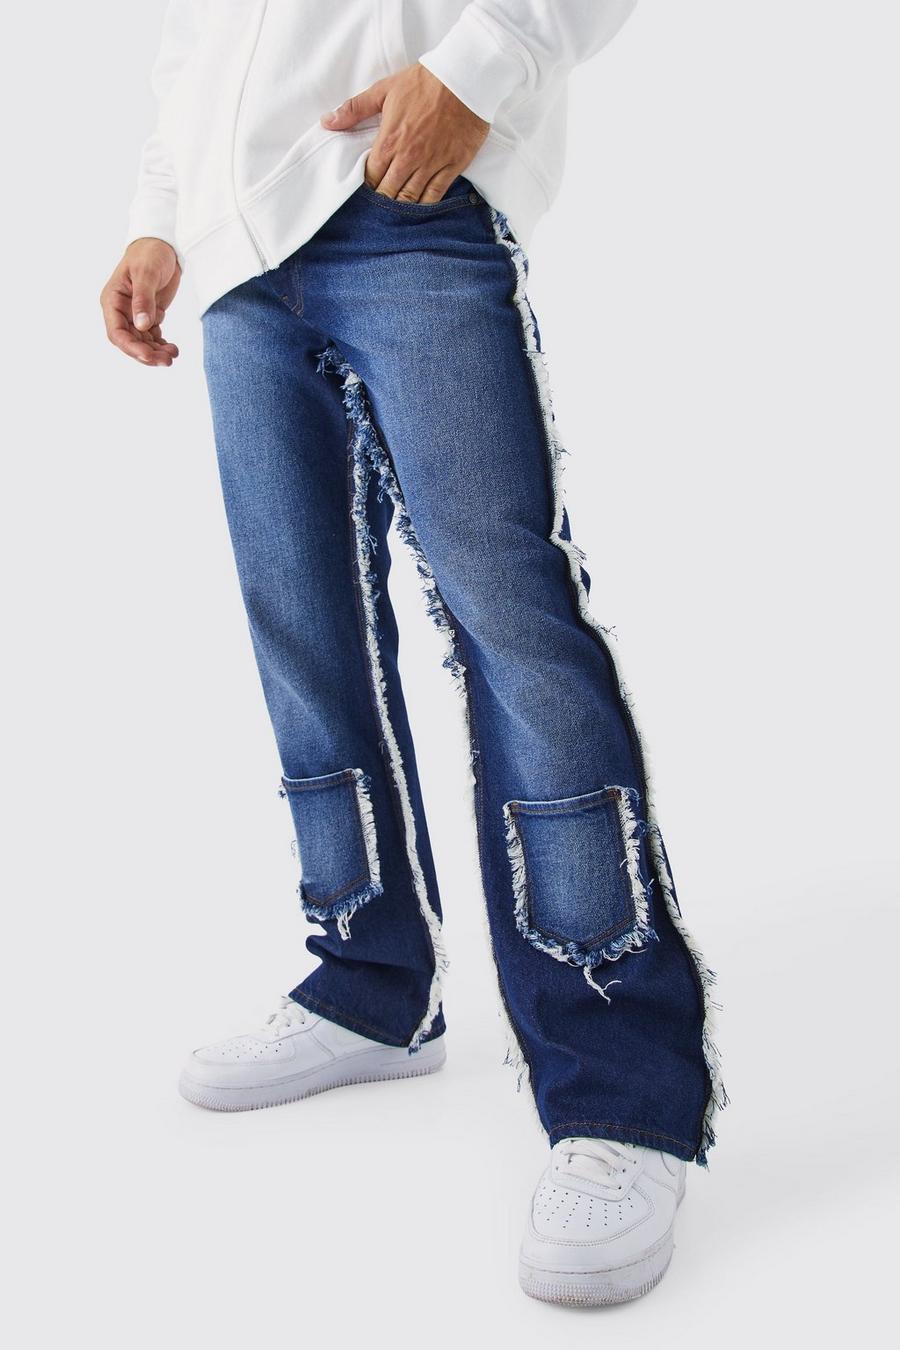 Indigo Relaxed Rigid Flare Frayed Seam Topman Jeans